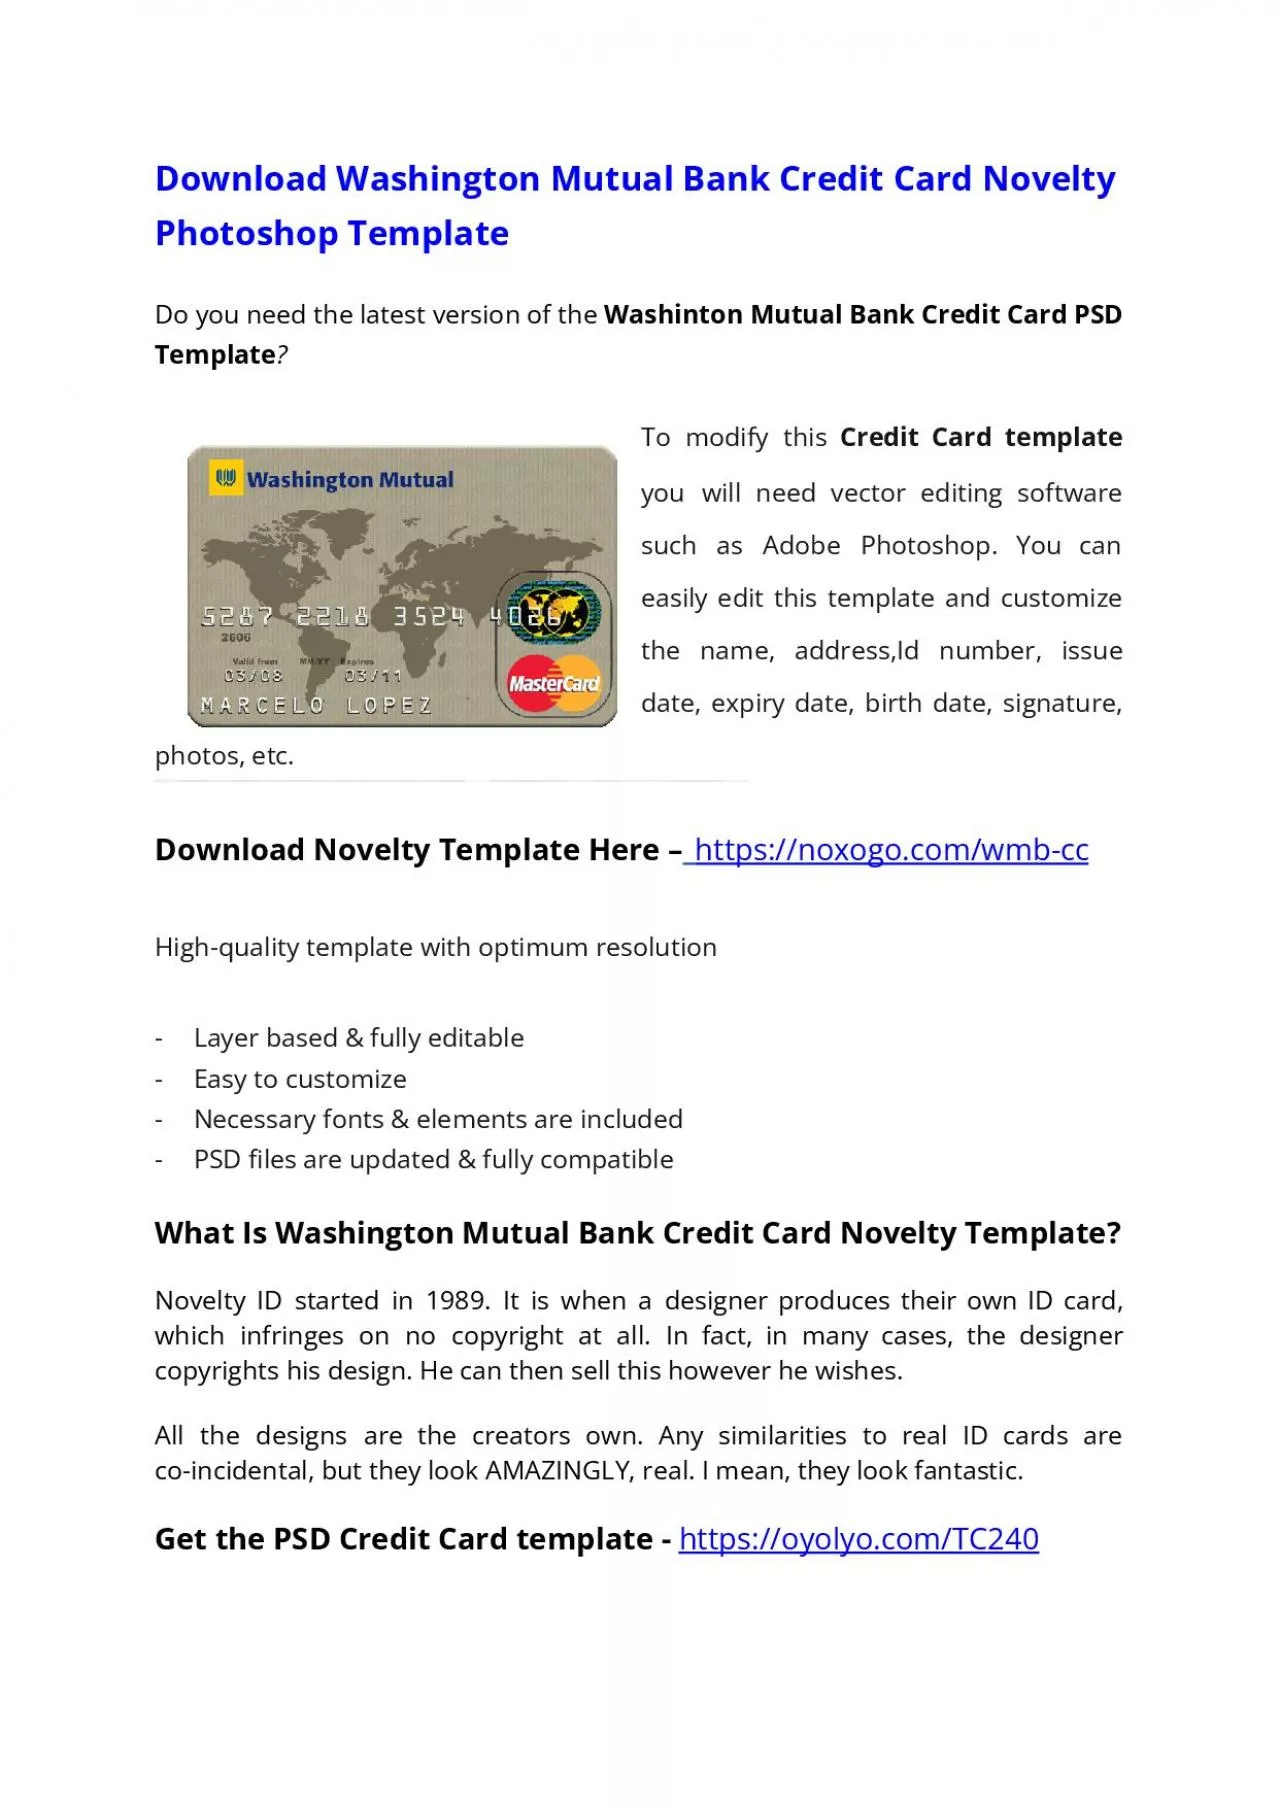 Washington Mutual Bank Credit Card PSD Template – Download Photoshop File